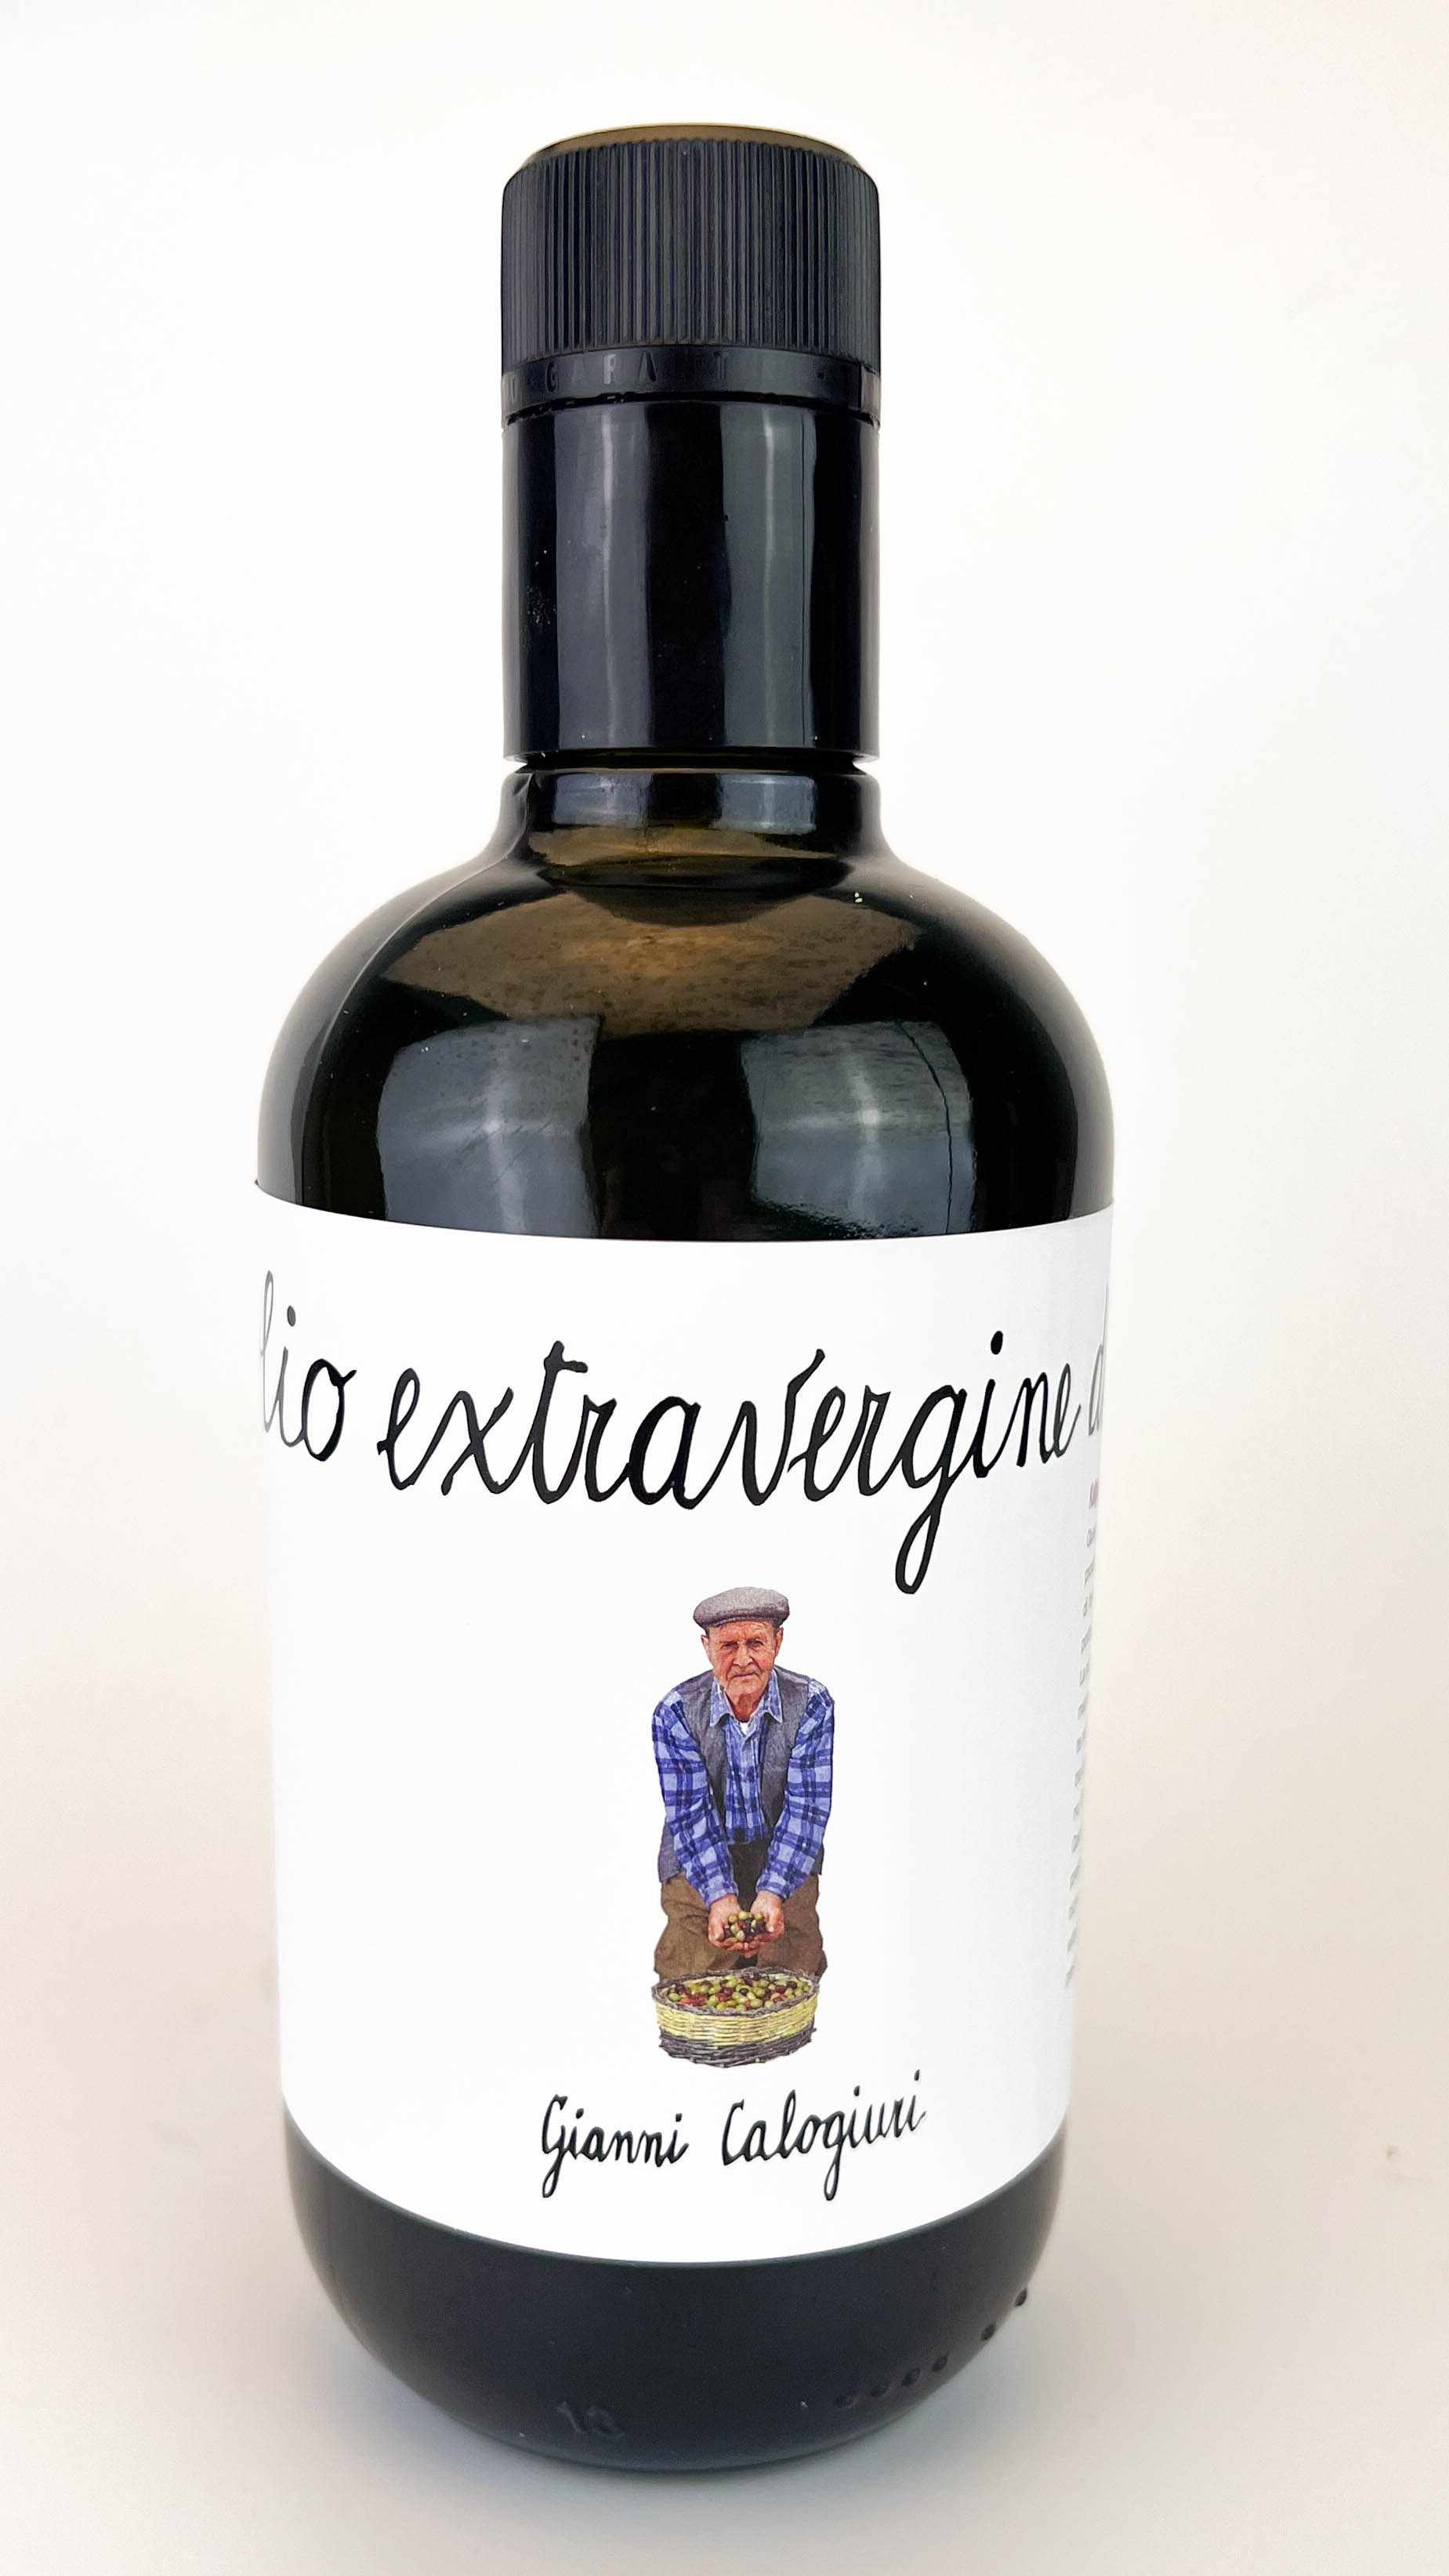 Gianni Calogiuri Natives Olivenöl extra 500ml